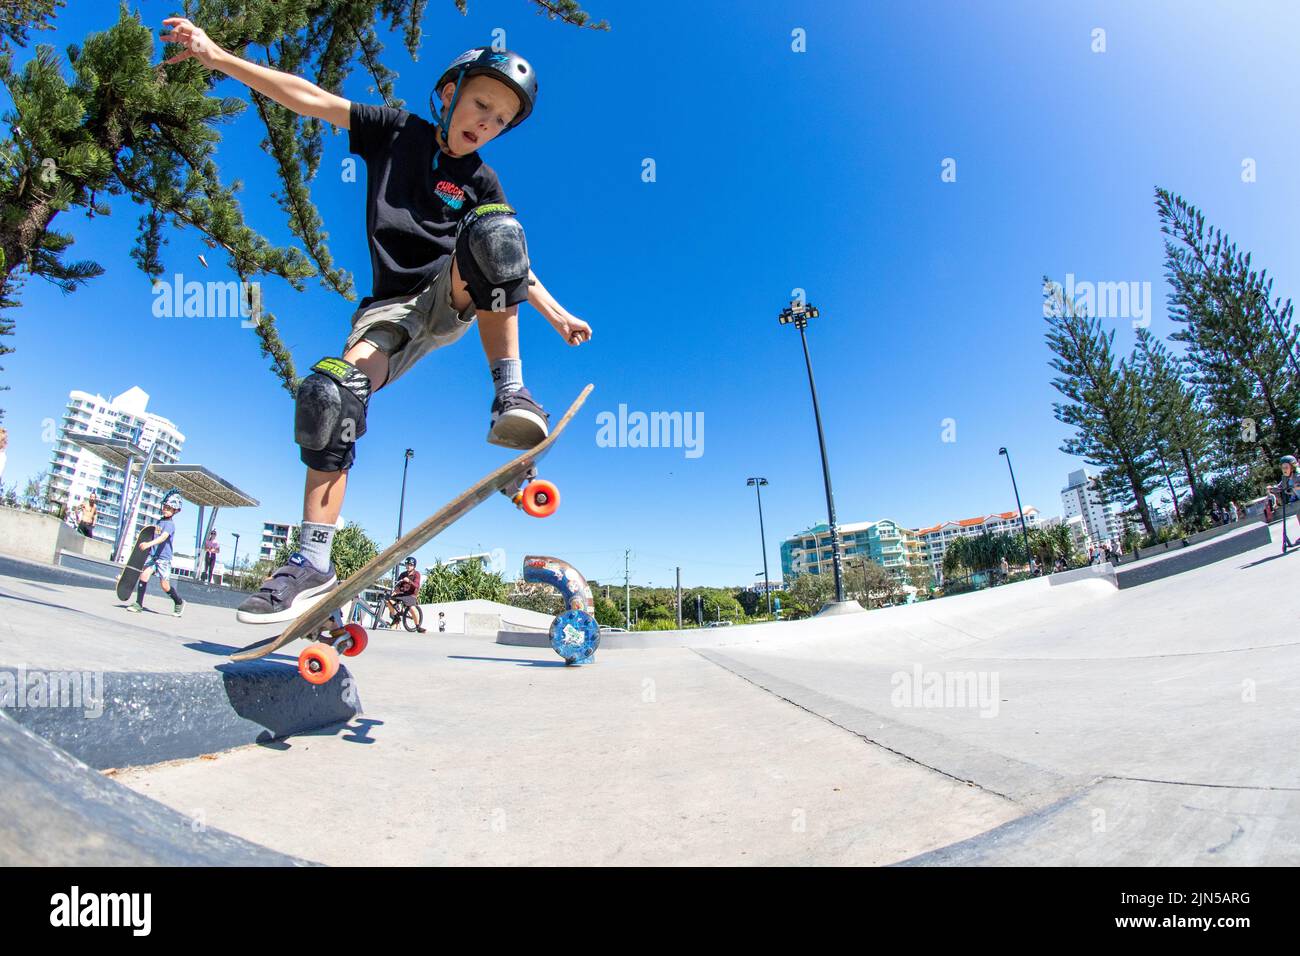 The young skater in Alexandra headland skatepark. Maroochydore, Australia. Stock Photo